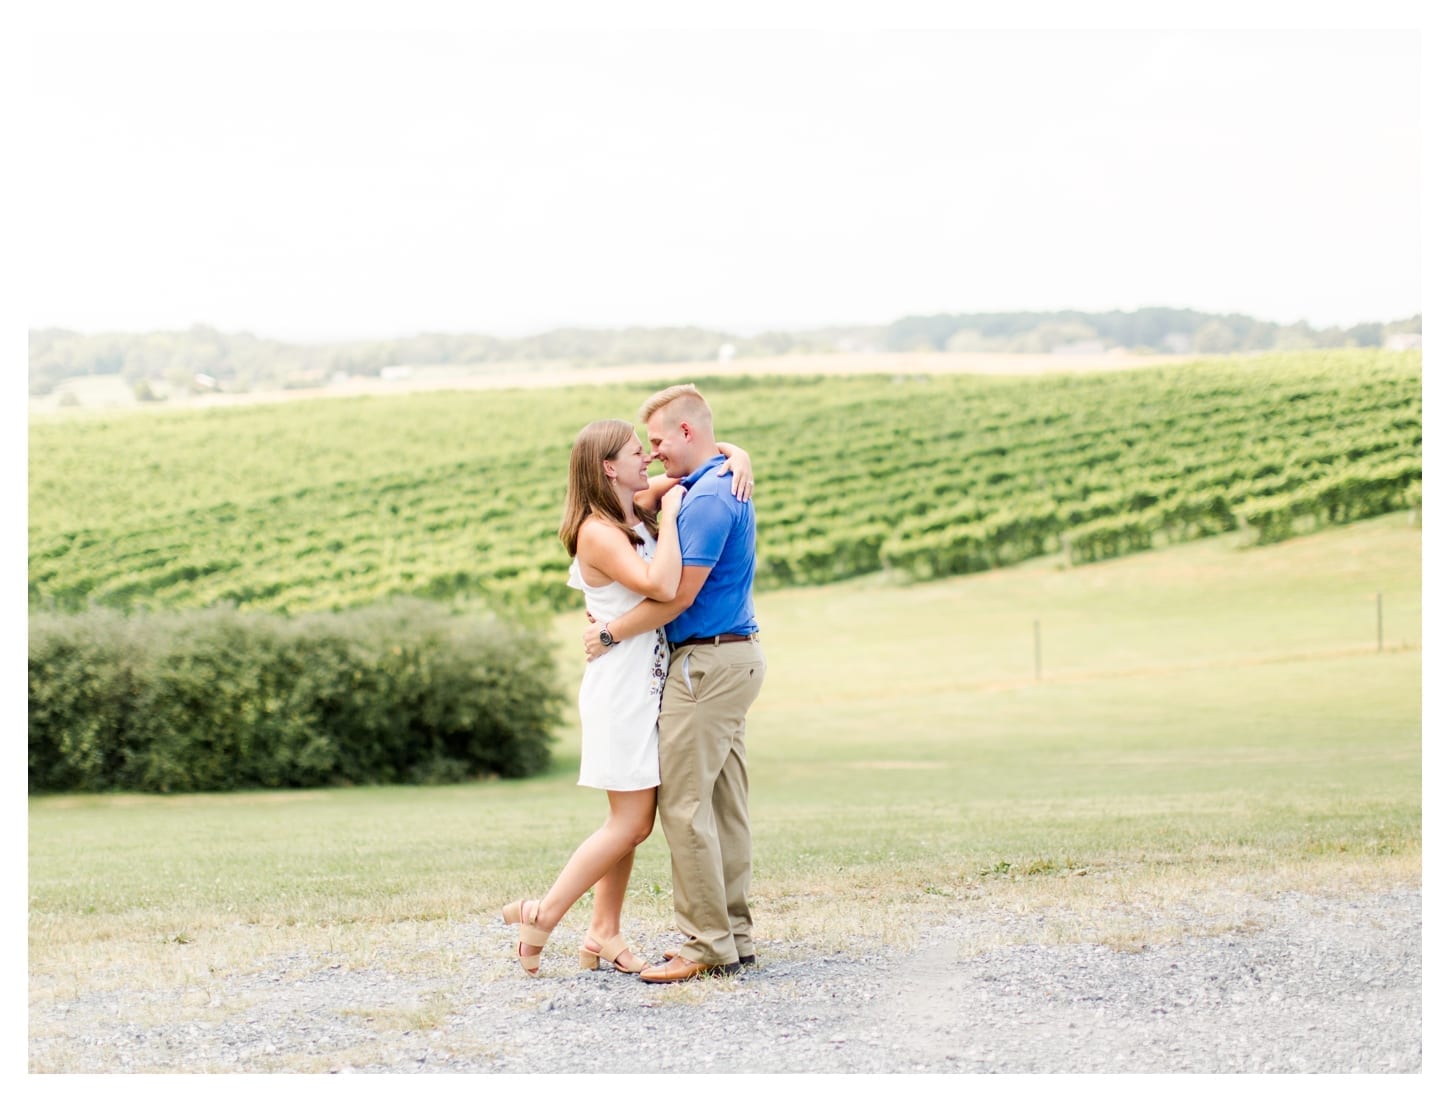 Barren Ridge Vineyards proposal photographer